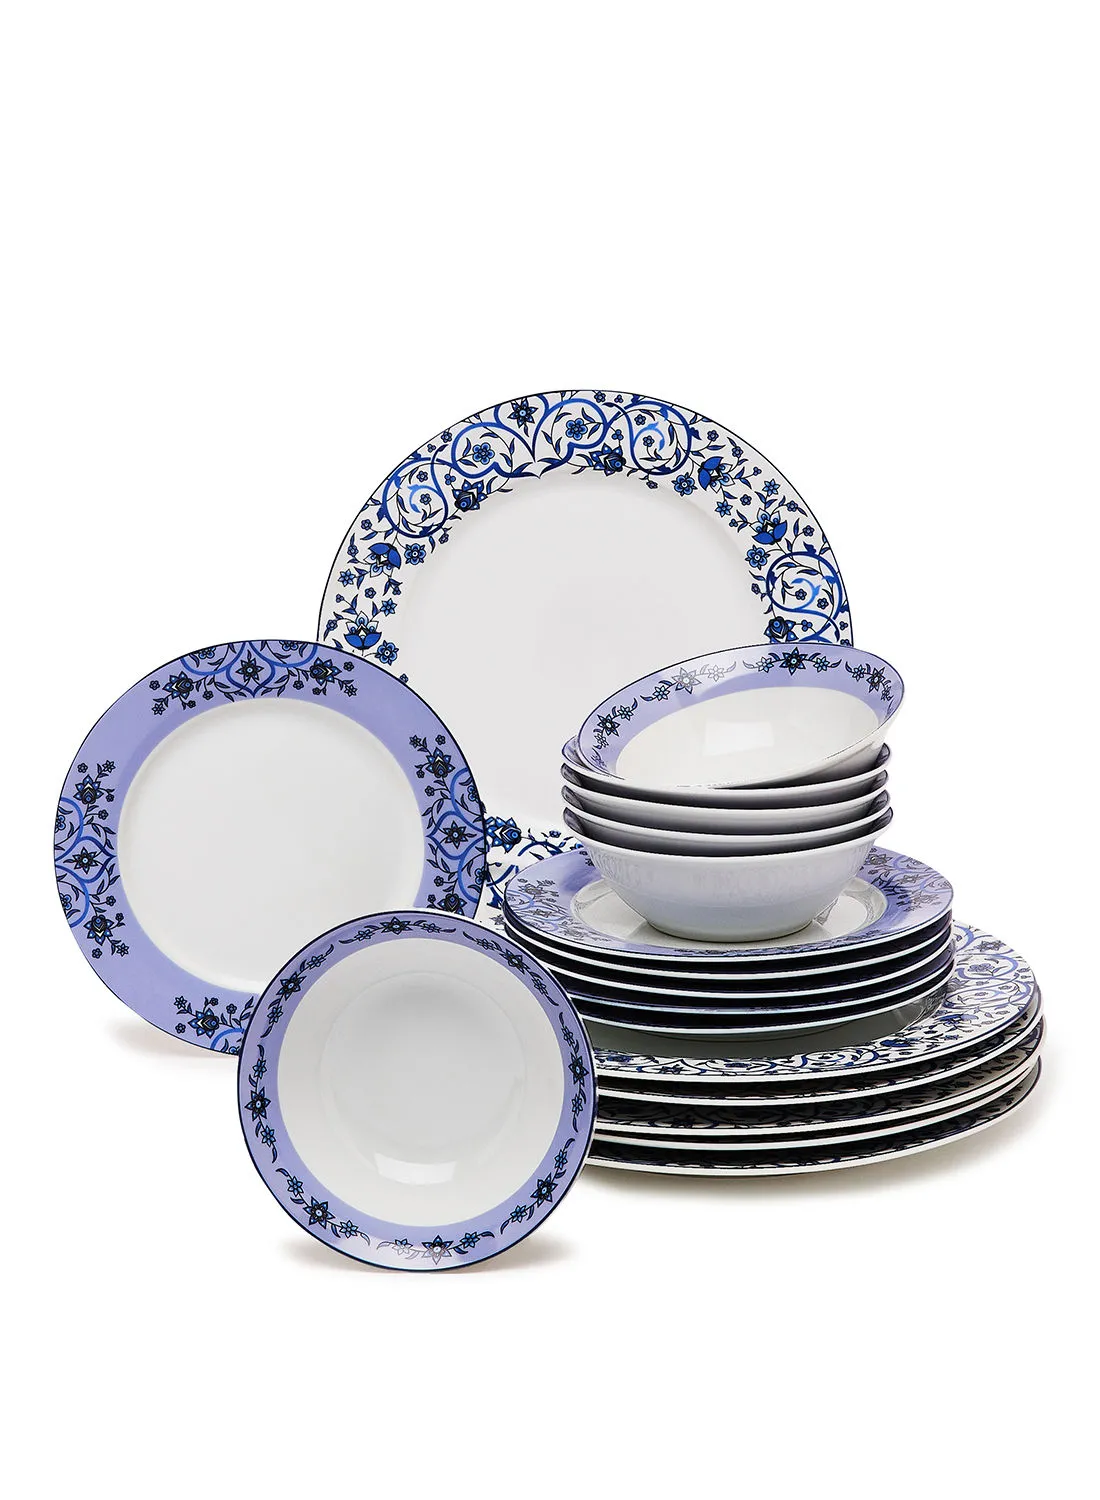 noon east 18 Piece Porcelain Dinner Set - Dishes, Plates - Dinner Plate, Side Plate, Bowl - Serves 6 - Printed Design Colleen